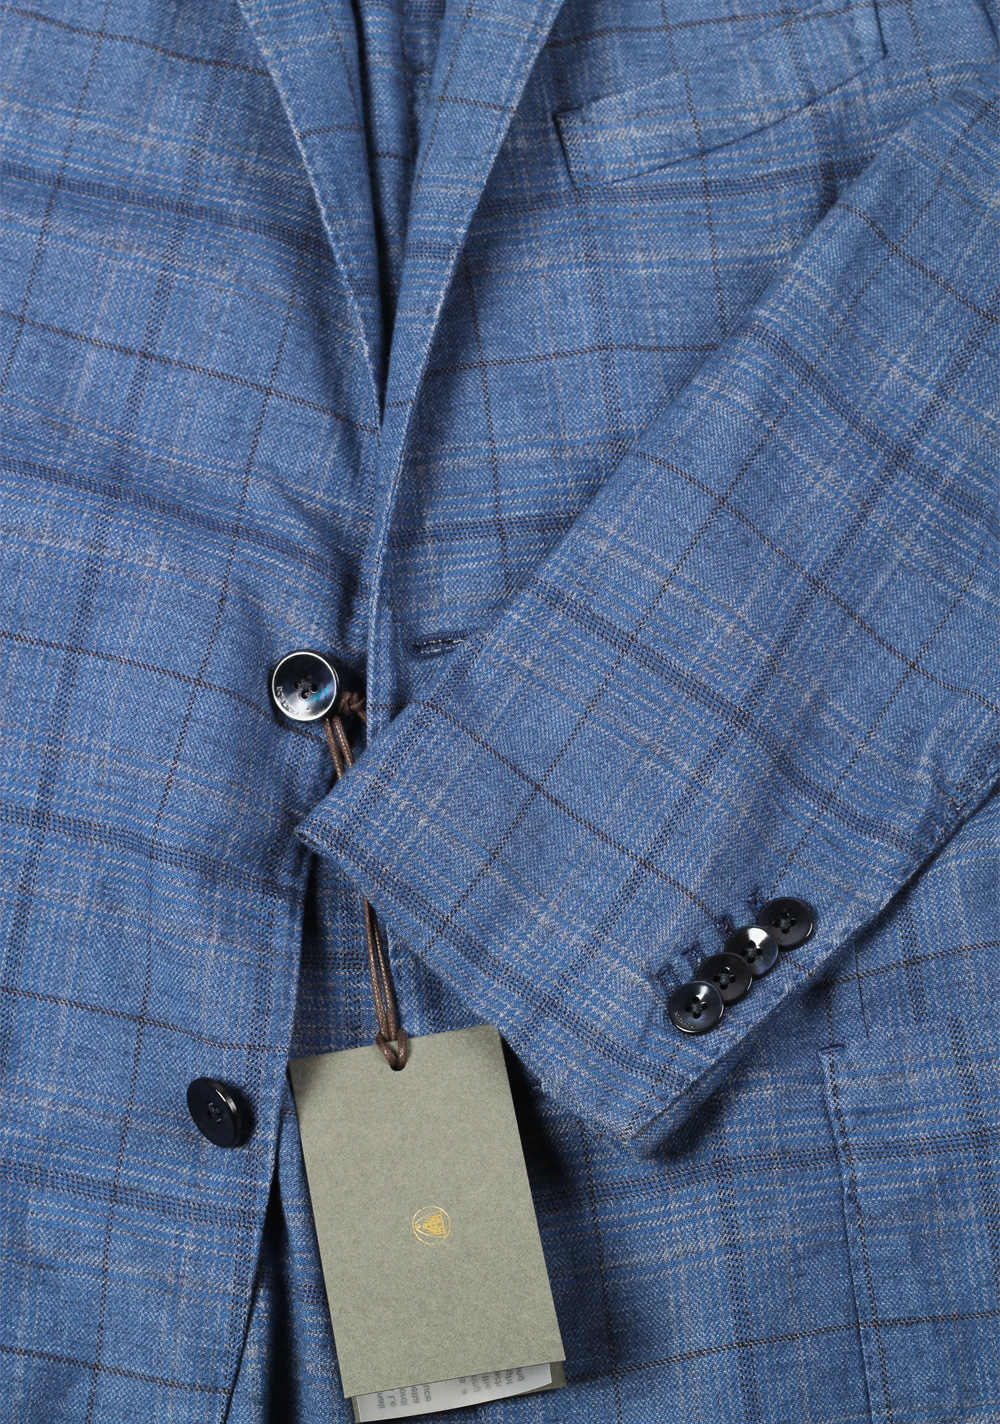 Boglioli K Jacket Checked Blue Sport Coat | Costume Limité